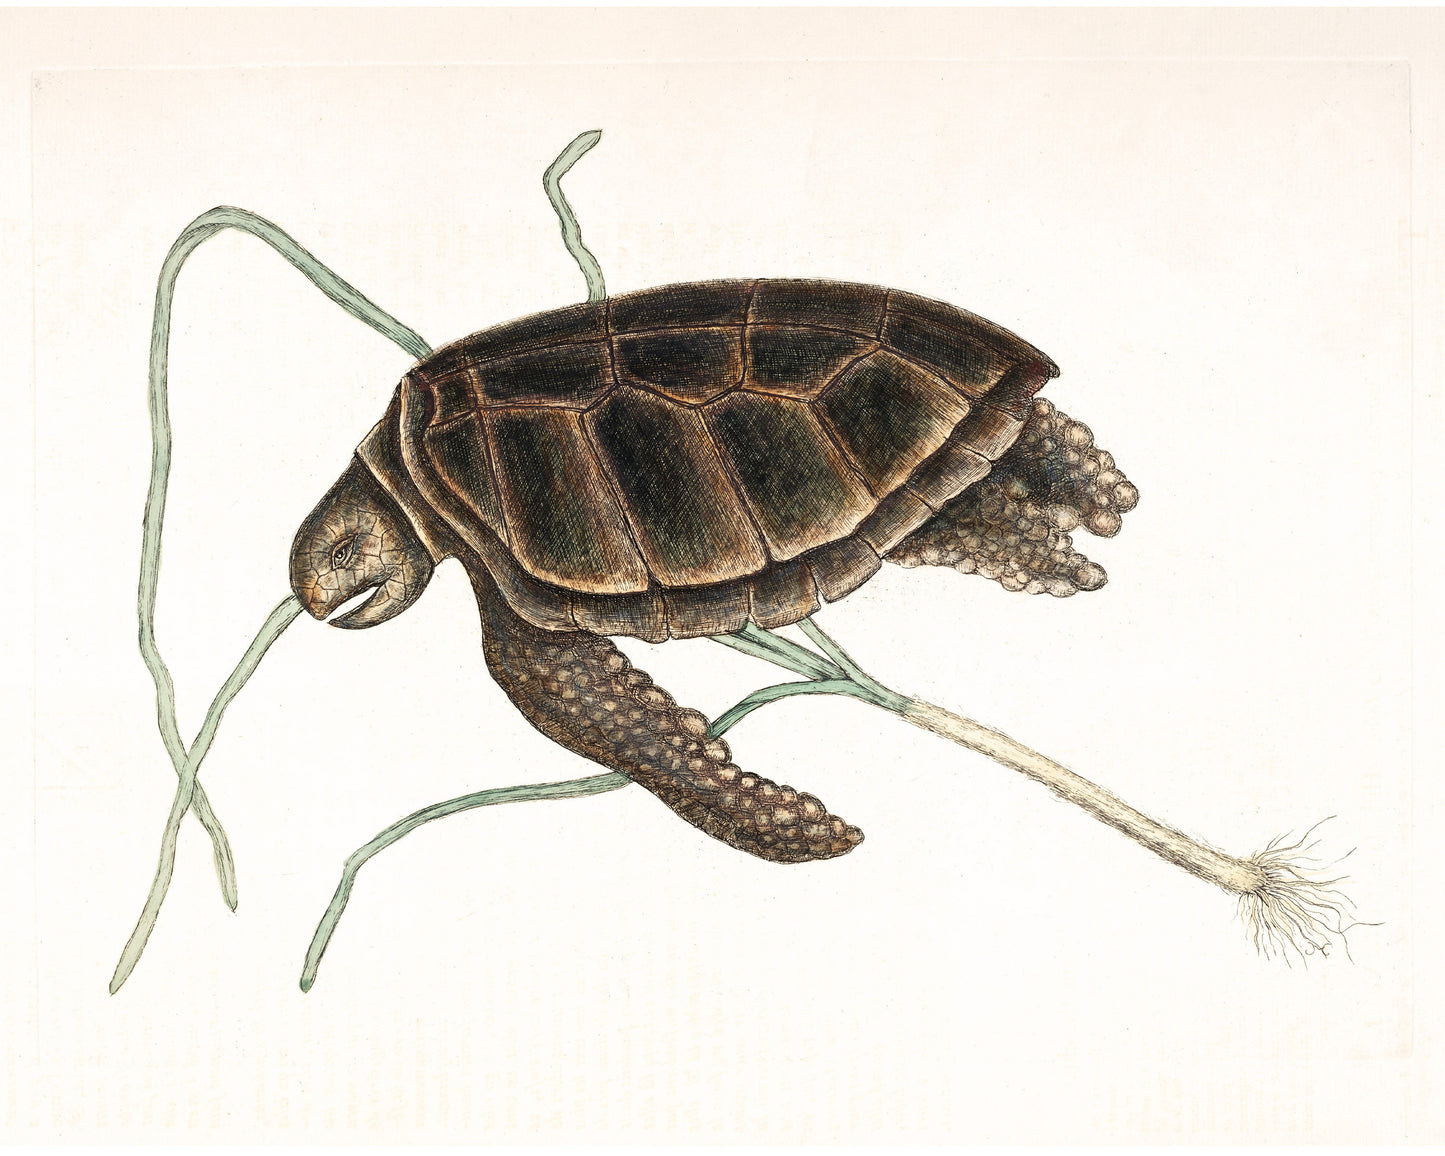 Vintage turtle art | Mark Catesby print | Animal wall art | Natural history illustration | Water, ocean animal | 18th century painting